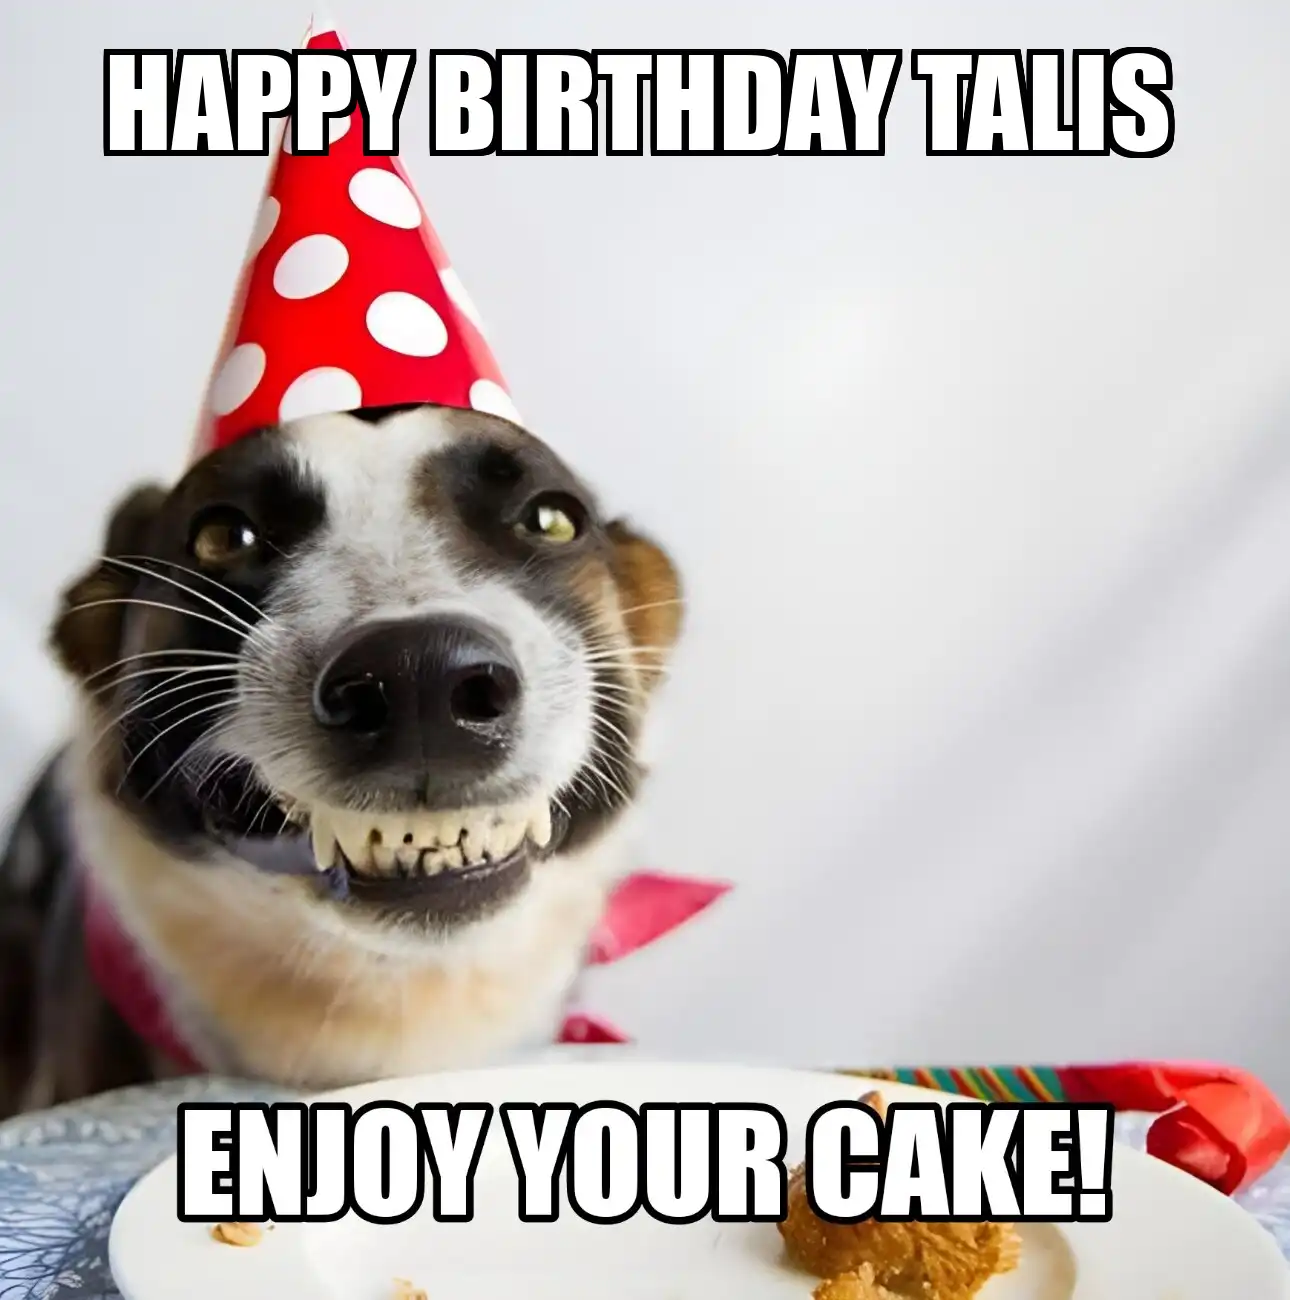 Happy Birthday Talis Enjoy Your Cake Dog Meme